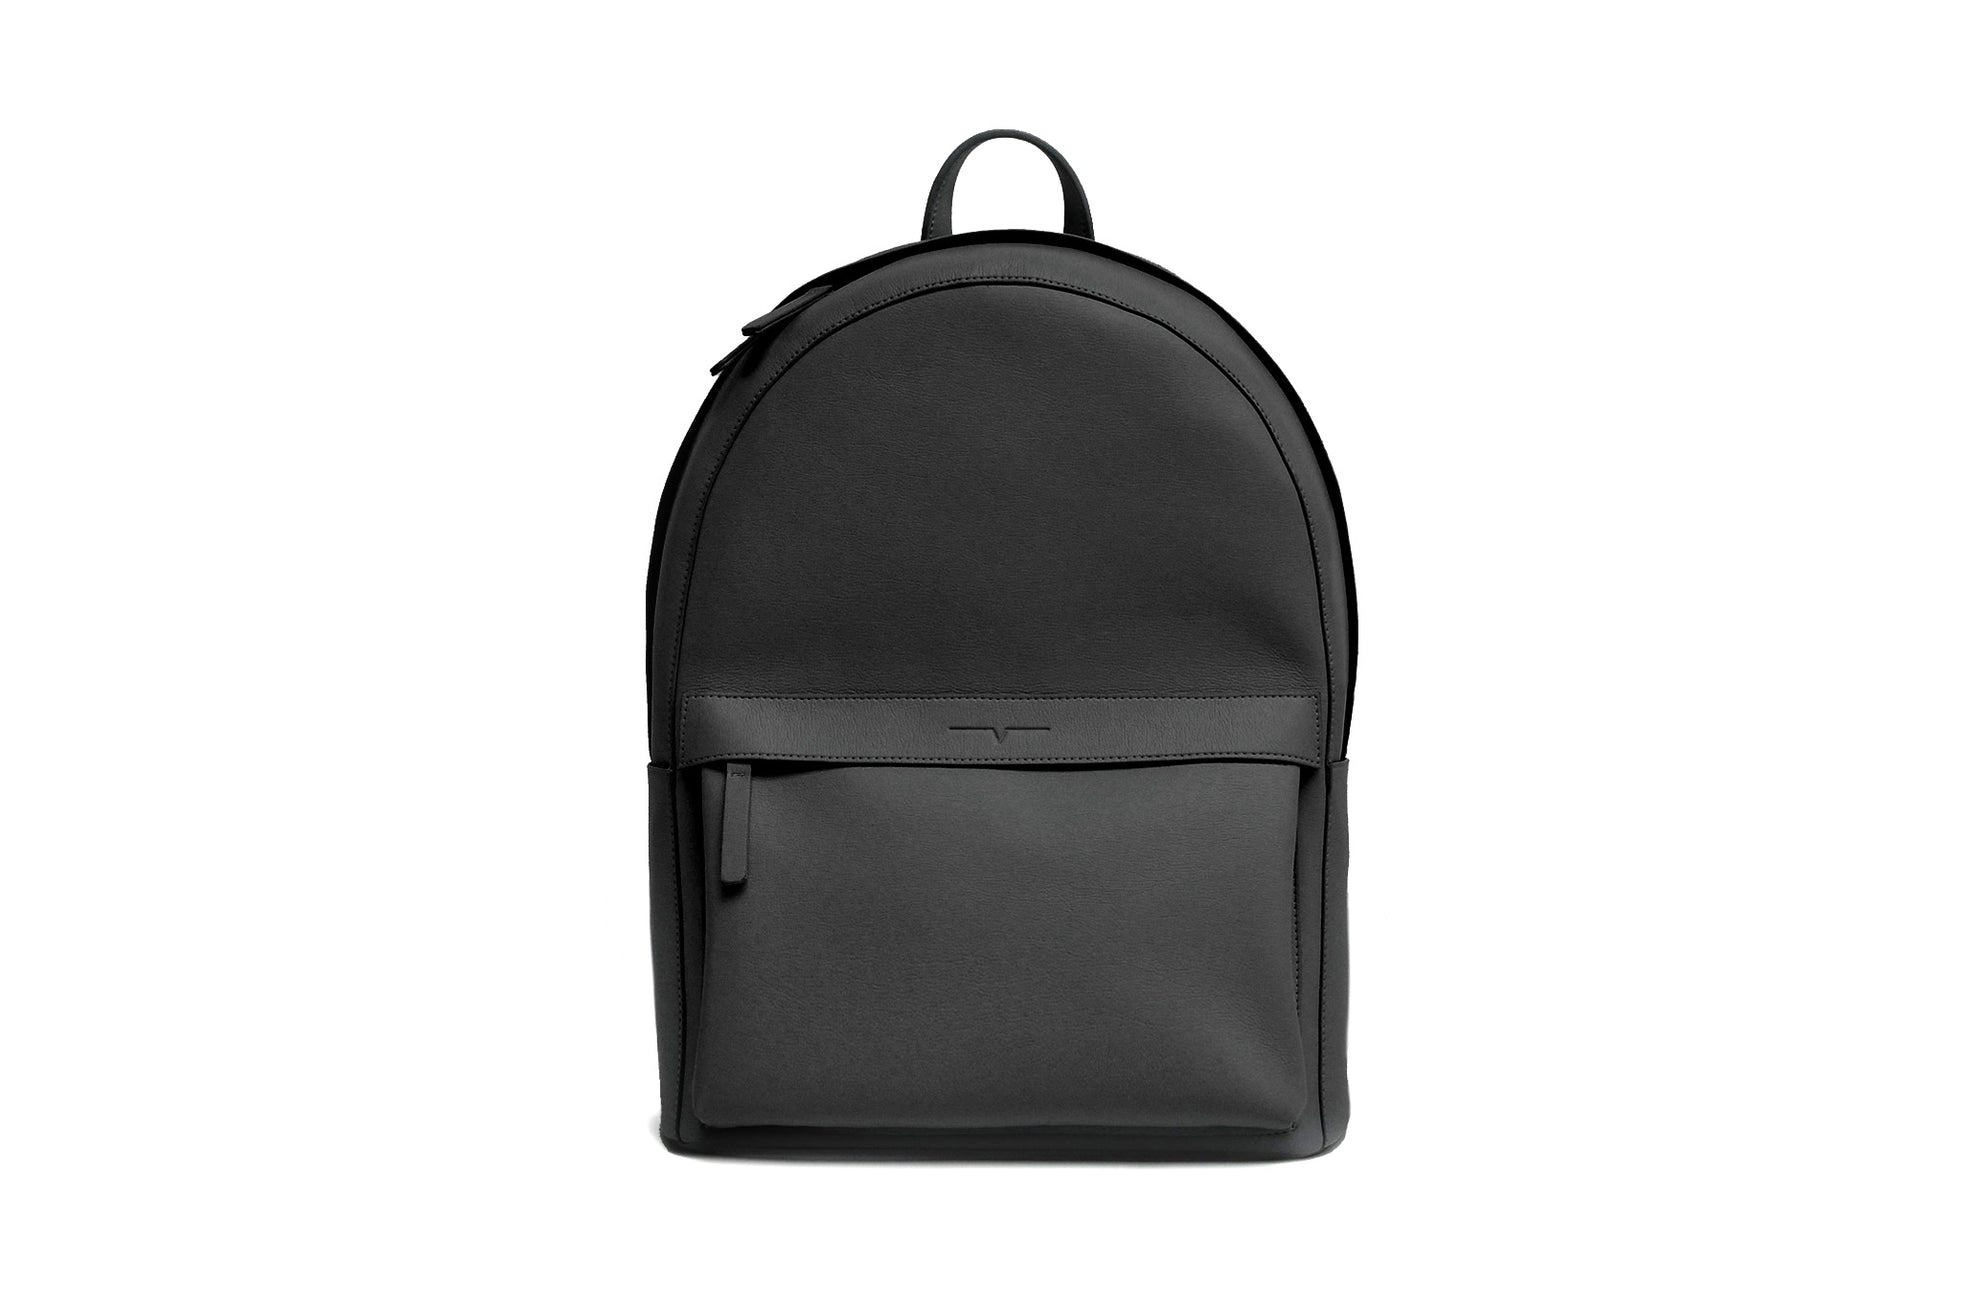 The Classic Backpack in Technik in Black image 1